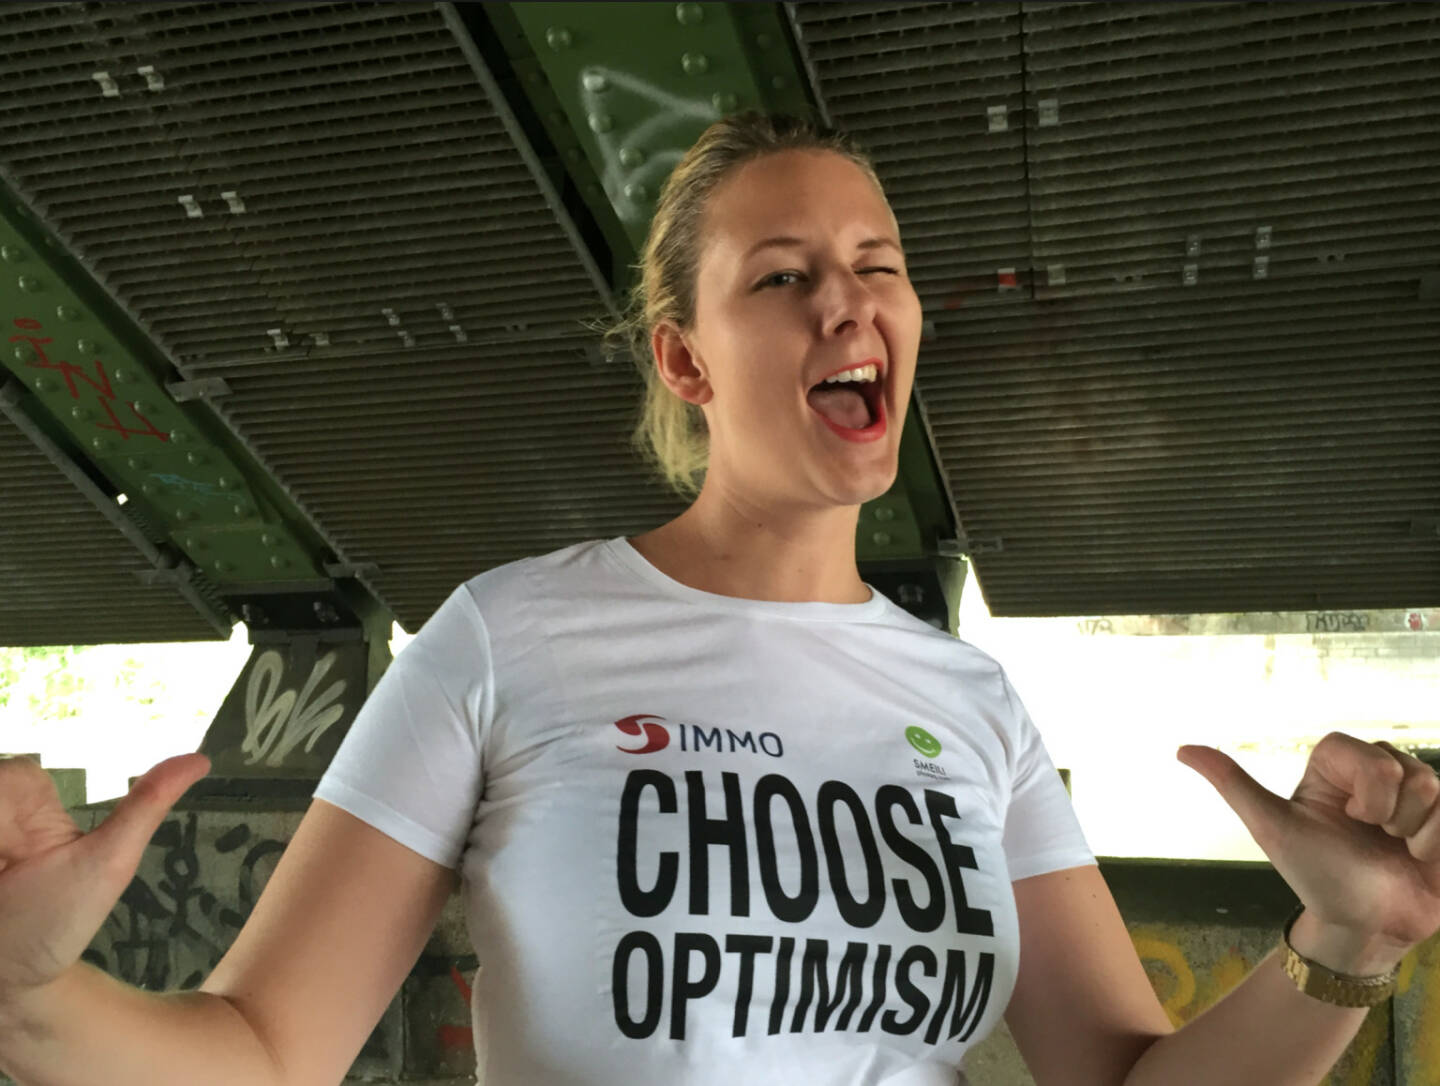 Yes Julia Pleschke, smoonr, Choose Optimism, Shirt in der S Immo / Smeil-Edition